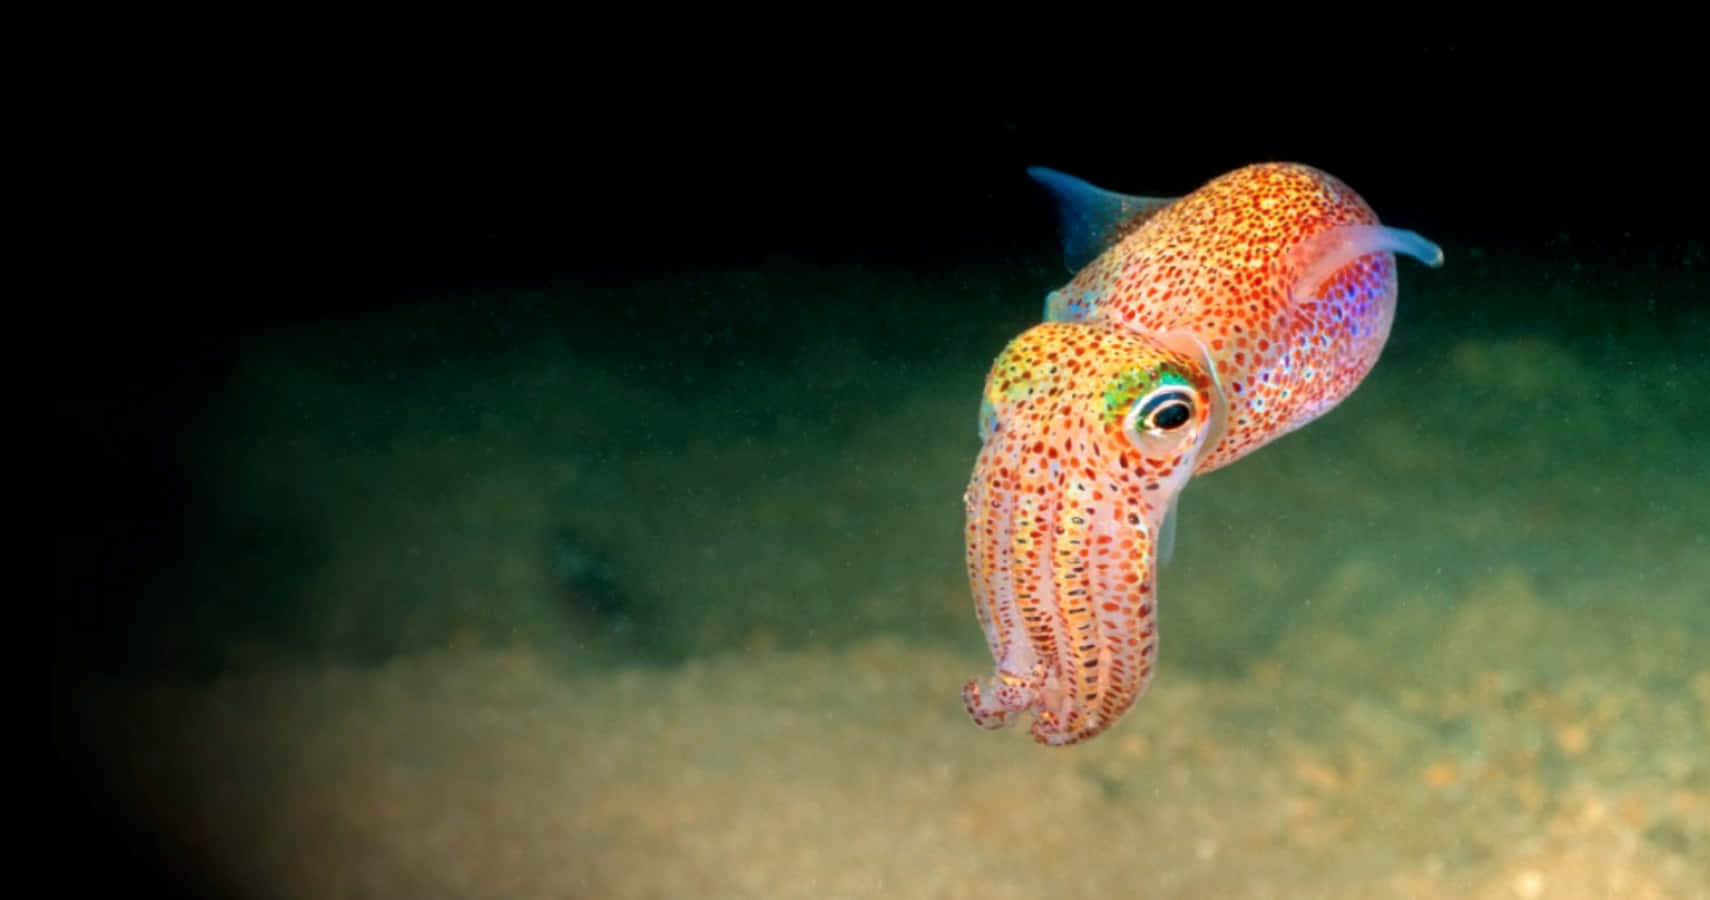 Giant squid beaching itself in the deep blue ocean.